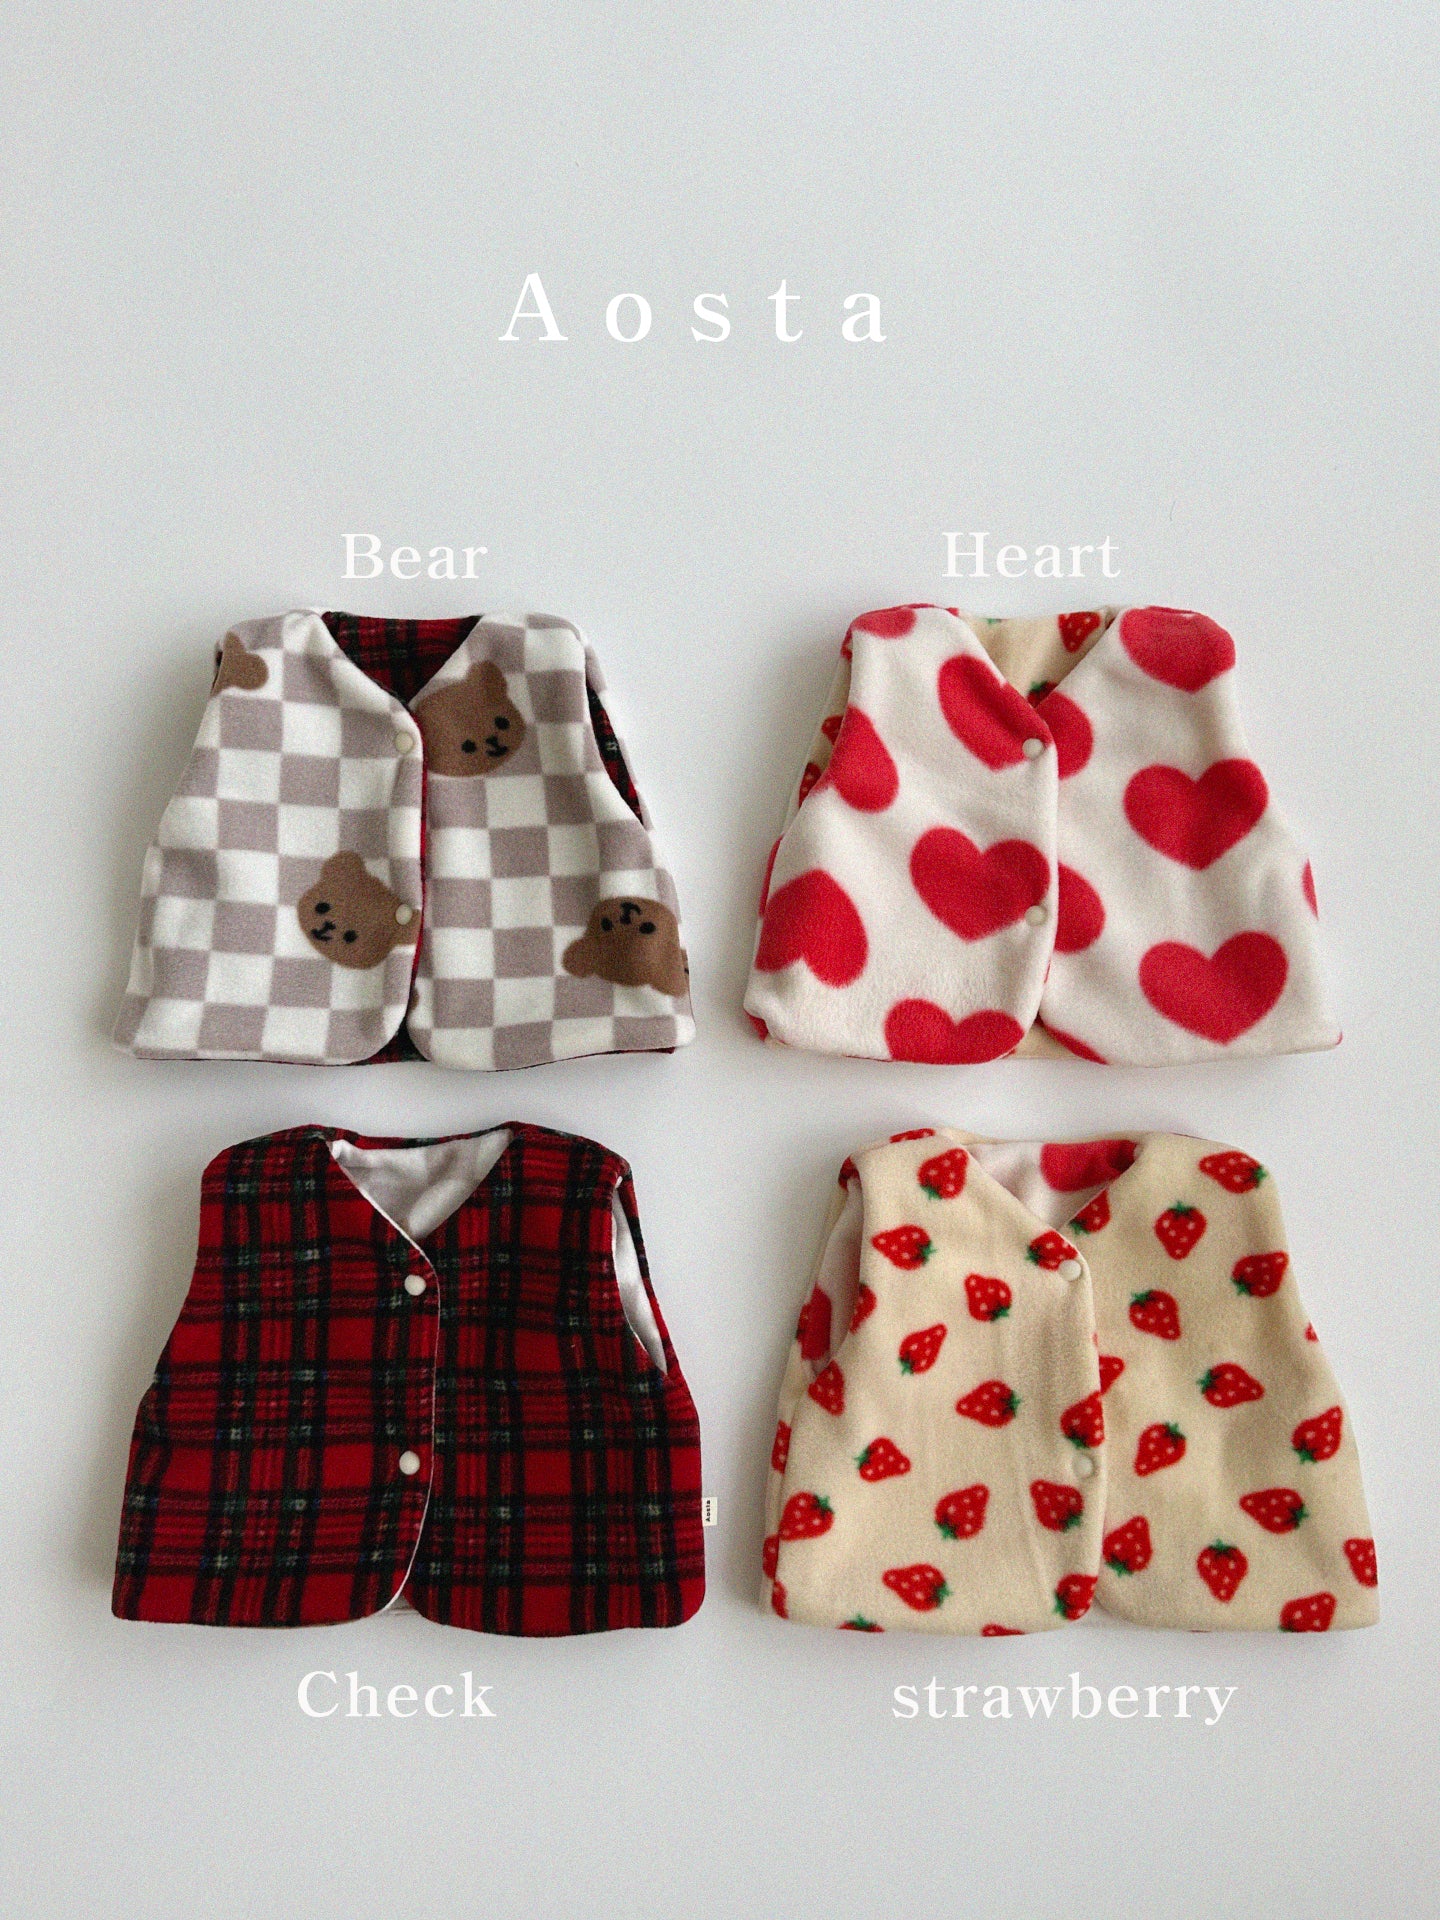 AOSTA KIDS Cloud Reversible Vest*Preorder